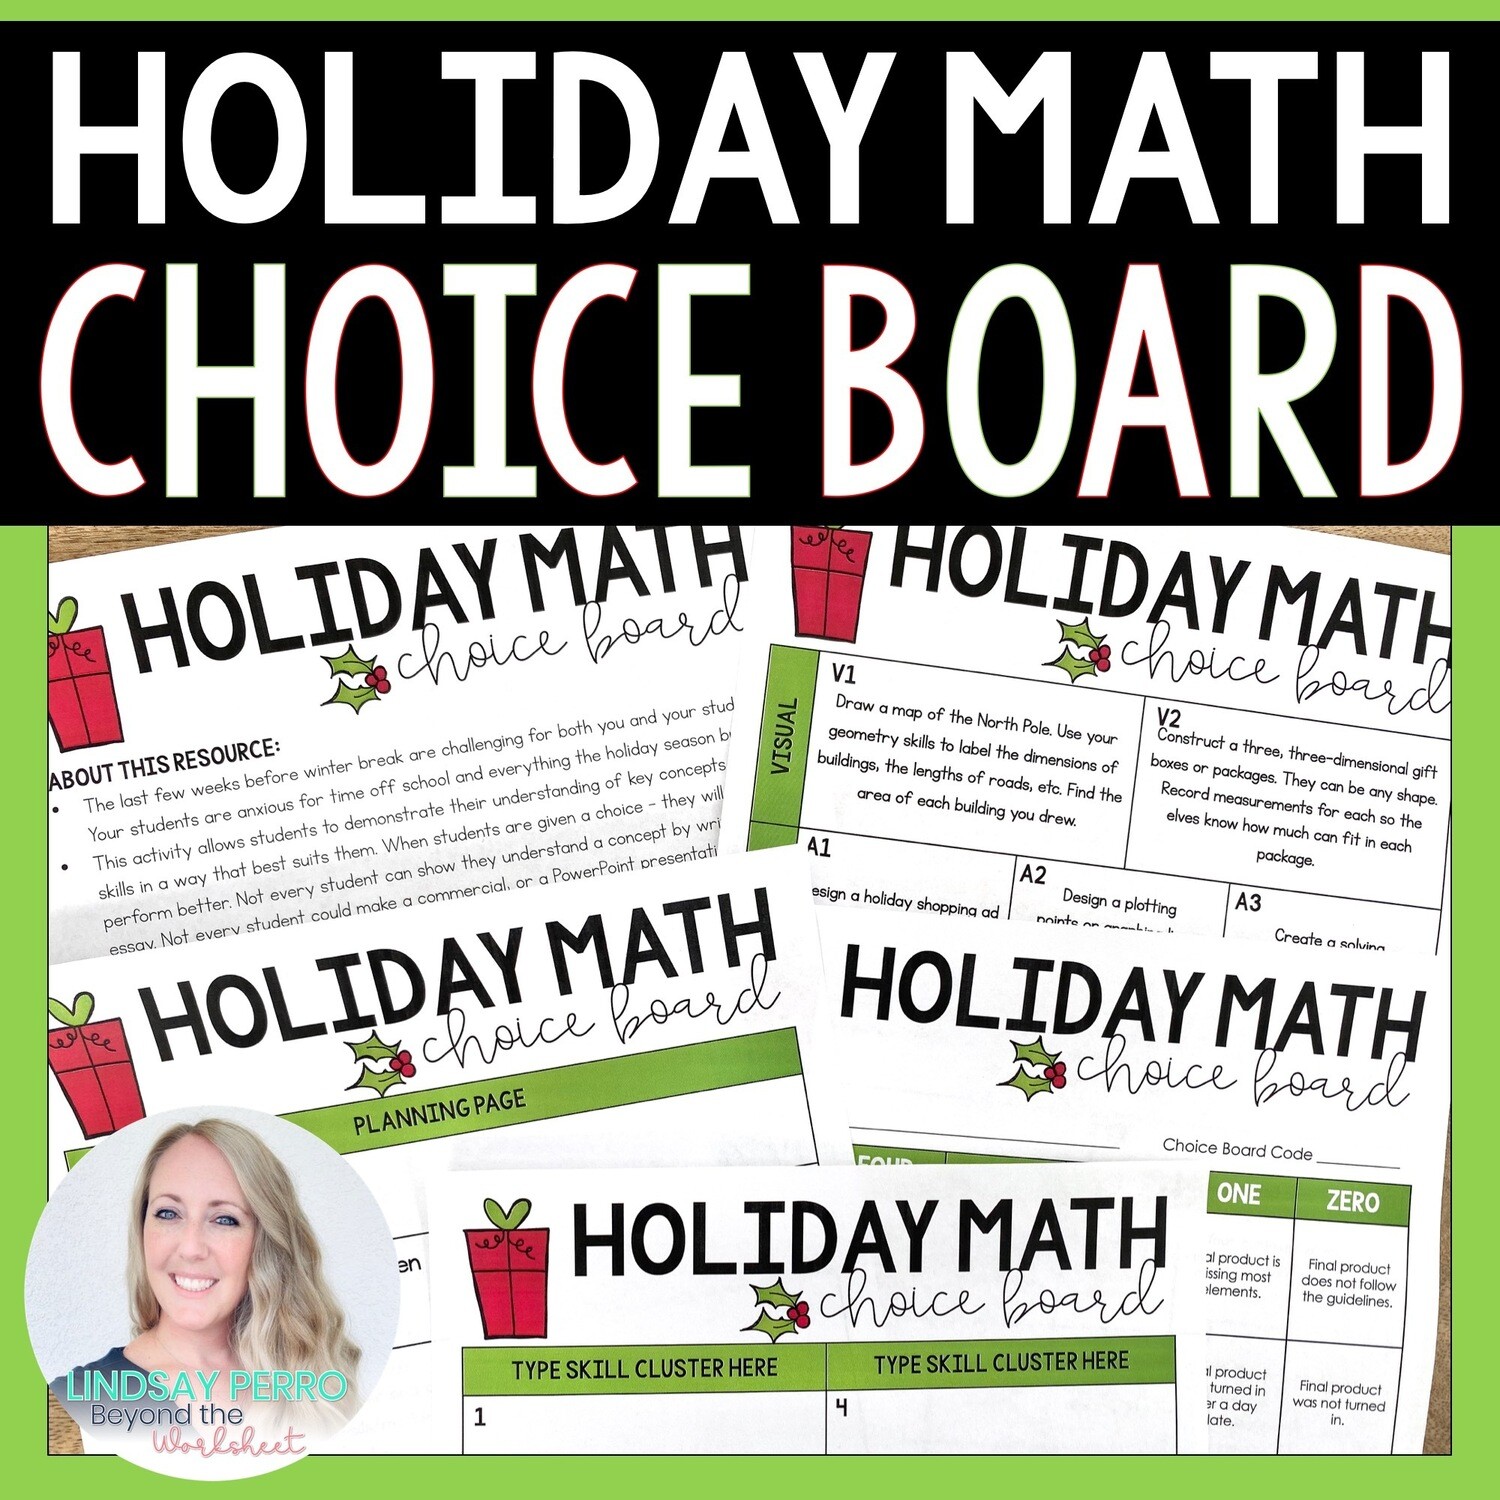 Holiday Math Choice Board